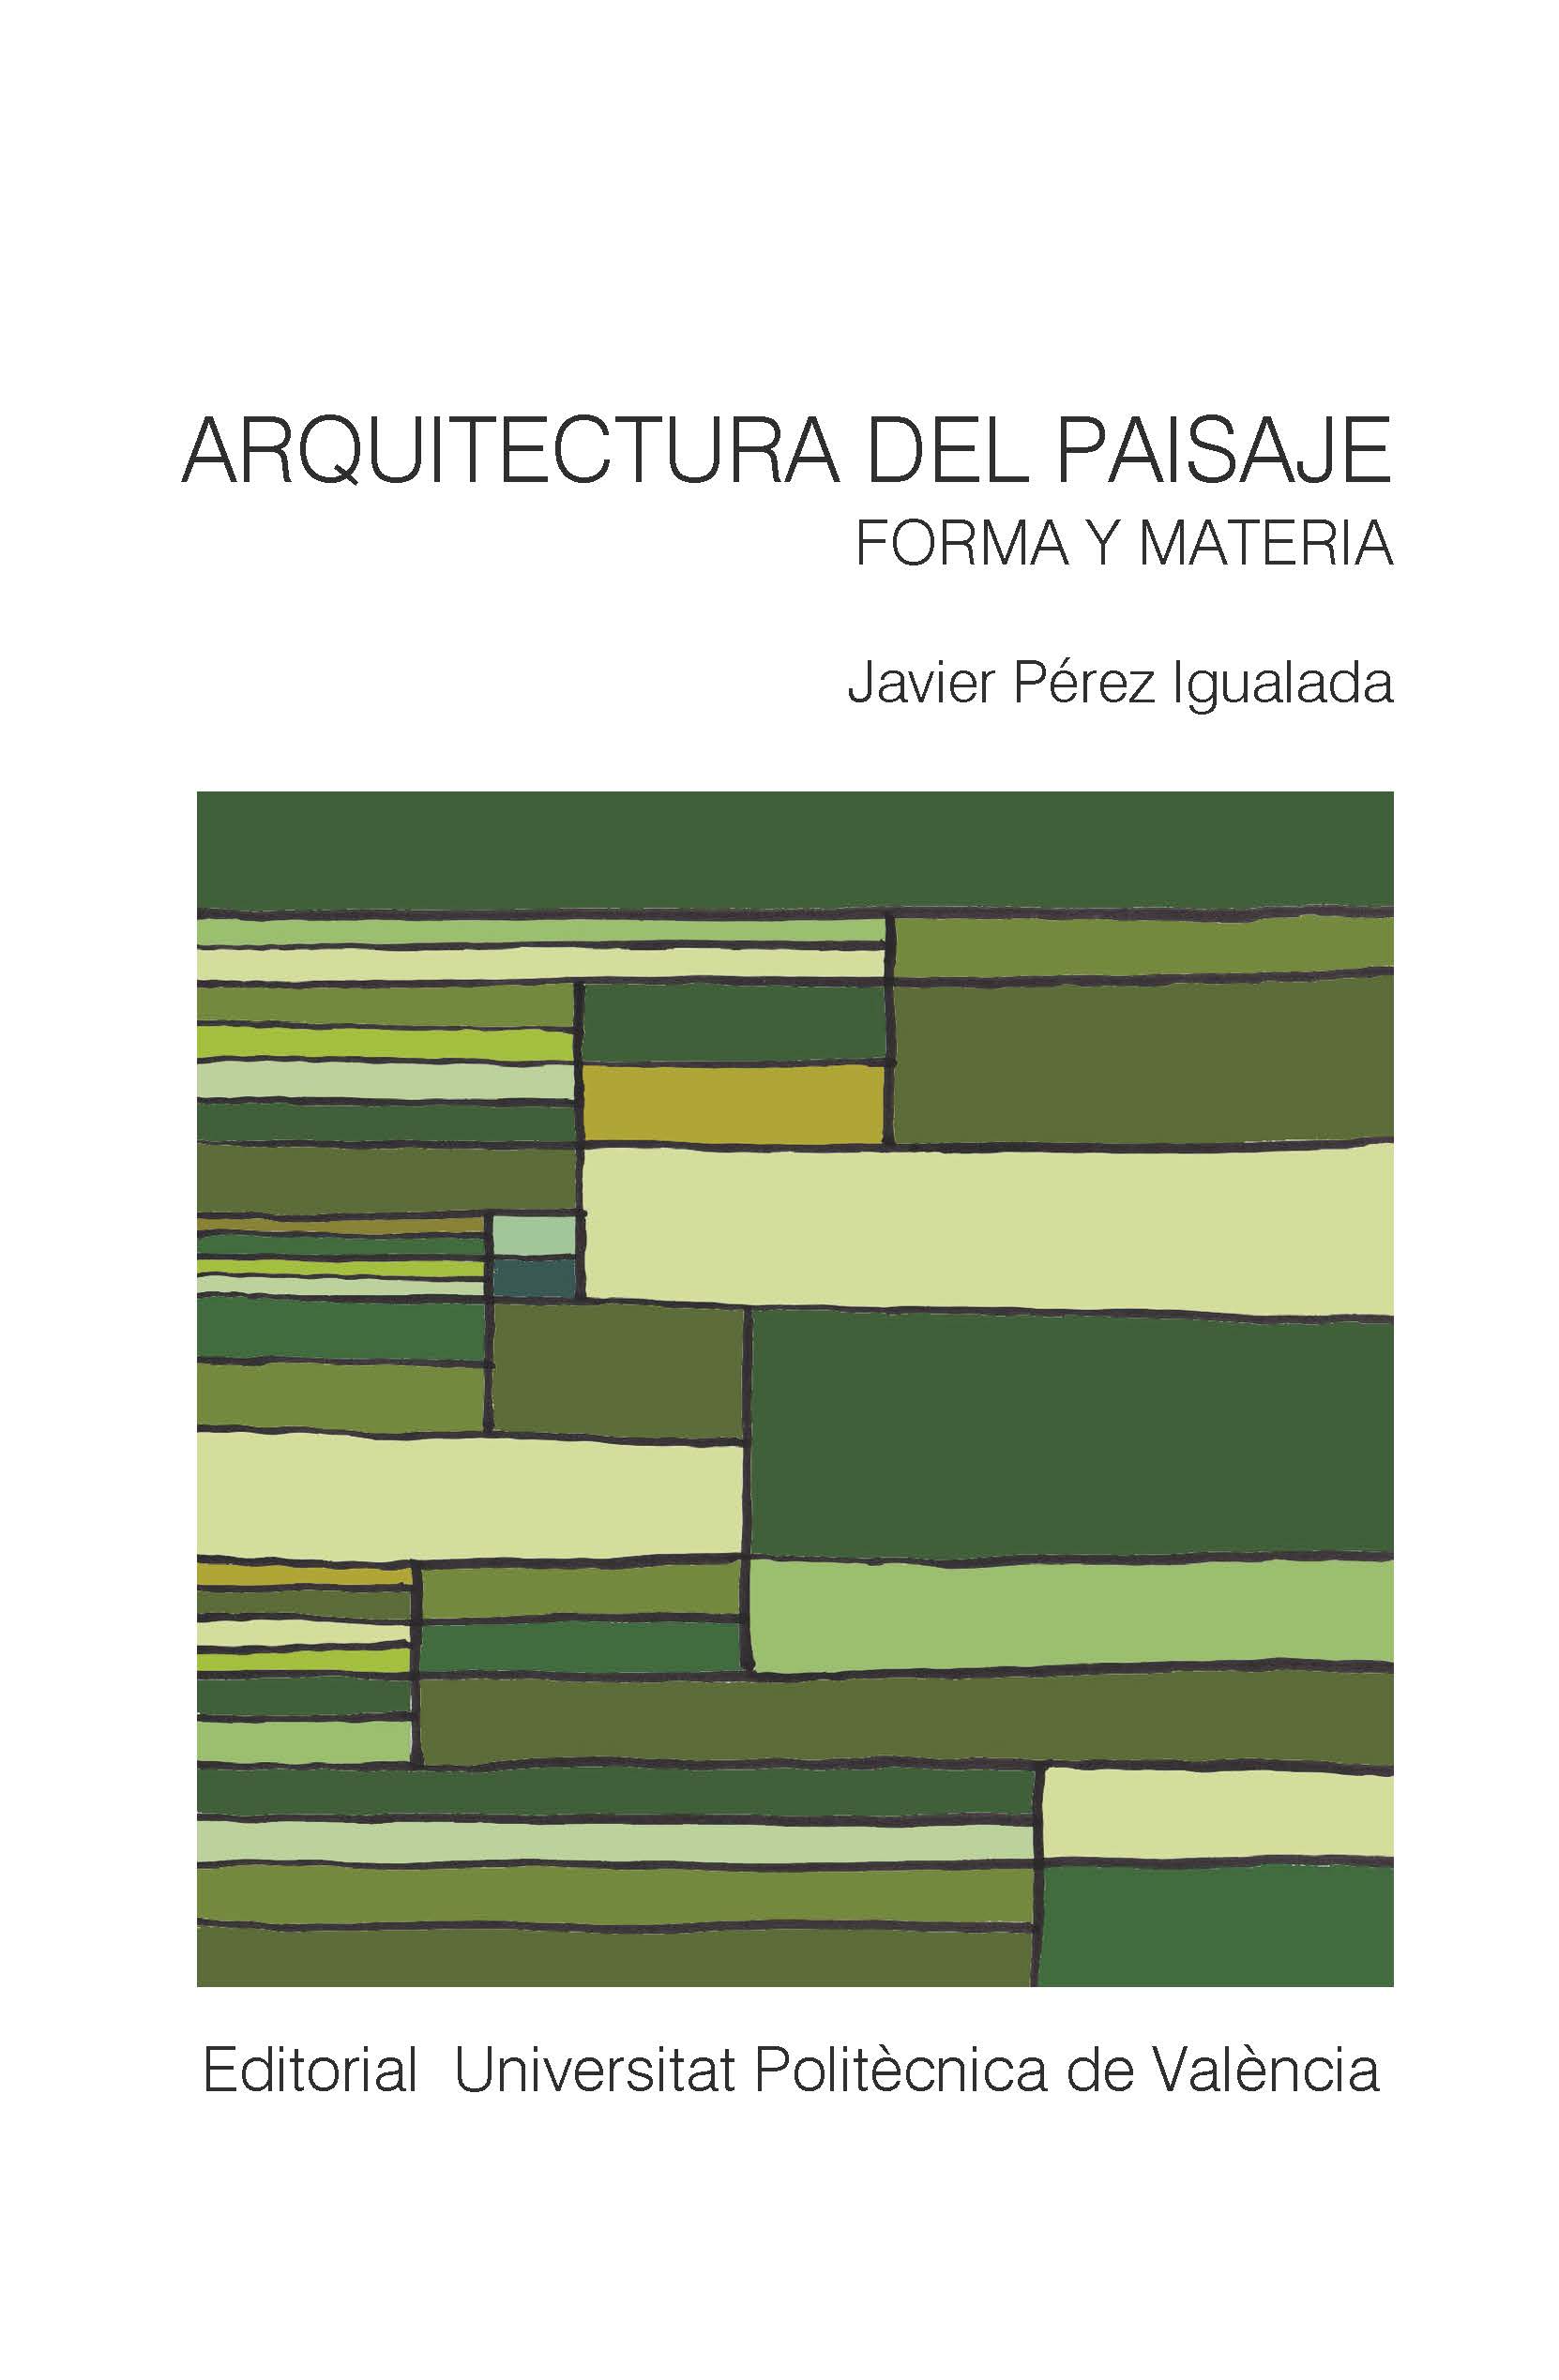 Imagen de portada del libro Arquitectura del paisaje